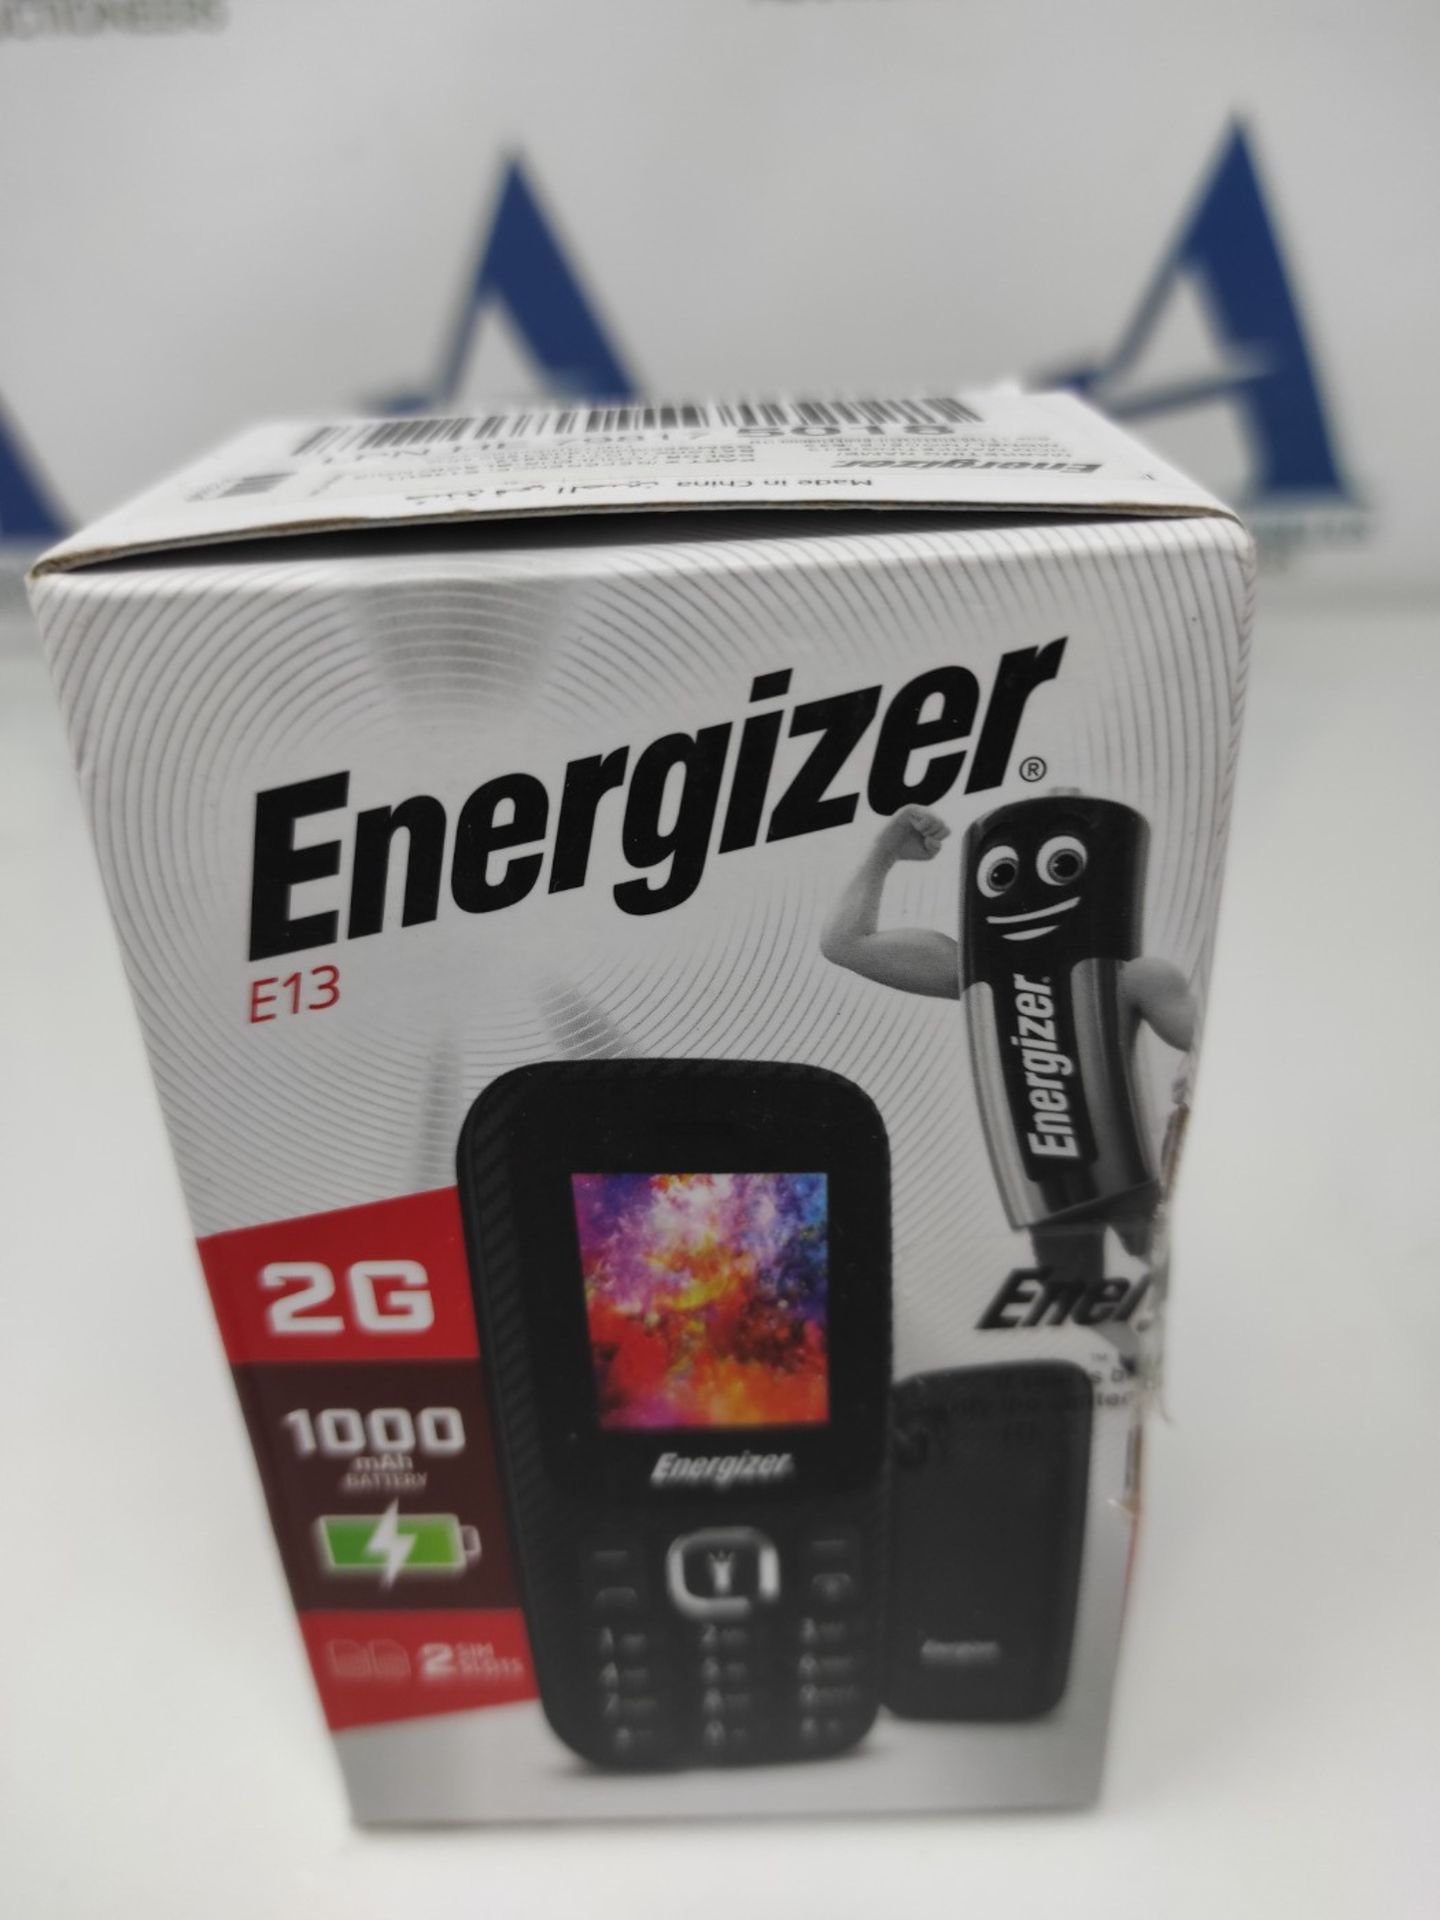 Energizer - Mobile E13-2G - Dual Sim Mobile Phone - Black - Mini SIM - Unlocked - Torc - Image 2 of 6